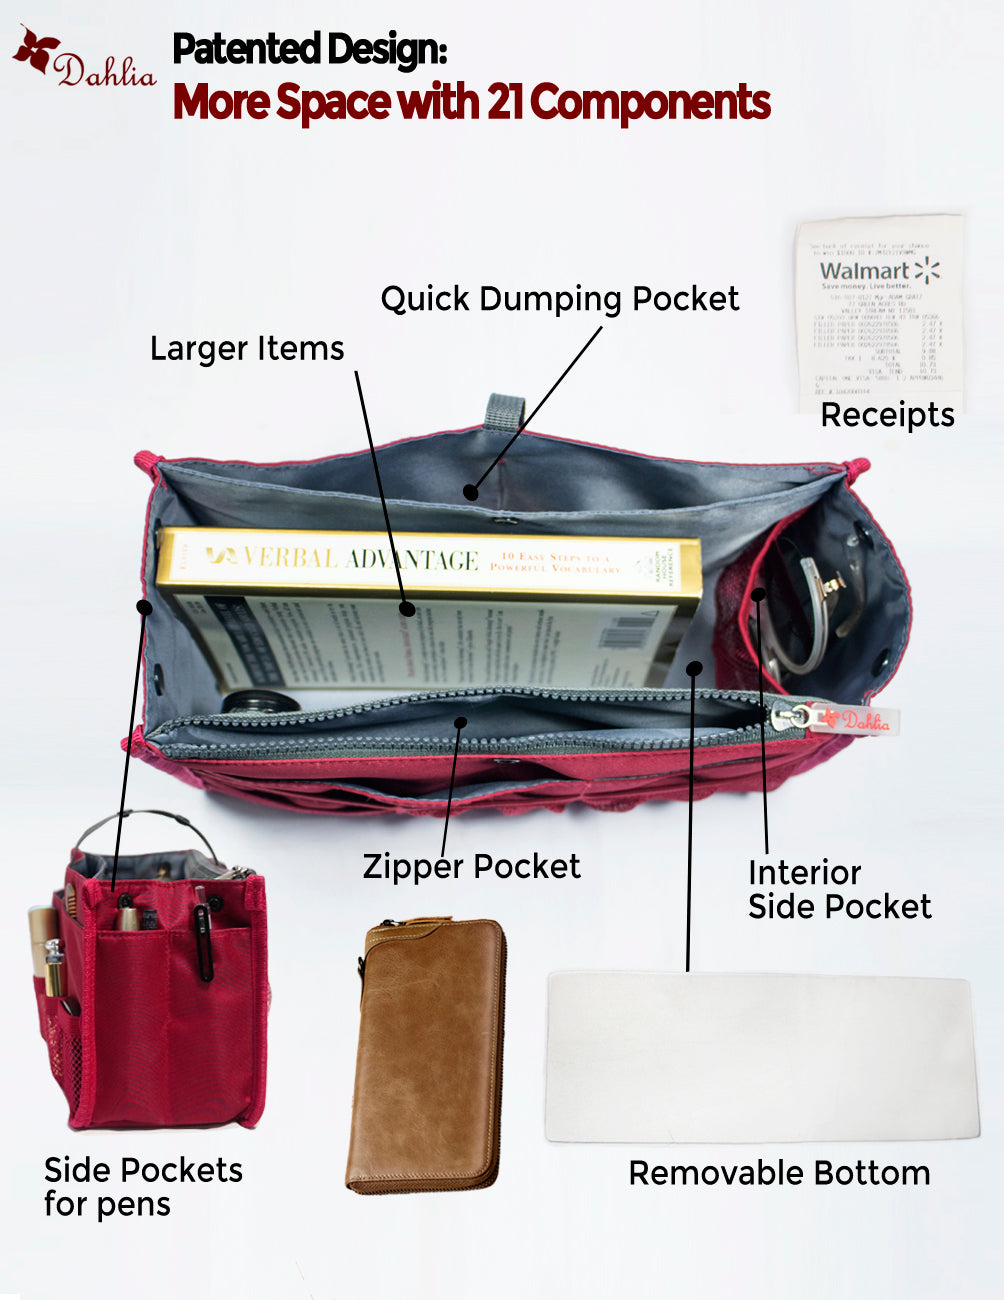  LIHIT LAB Bag Insert Organizer with Storage Pockets :  Everything Else